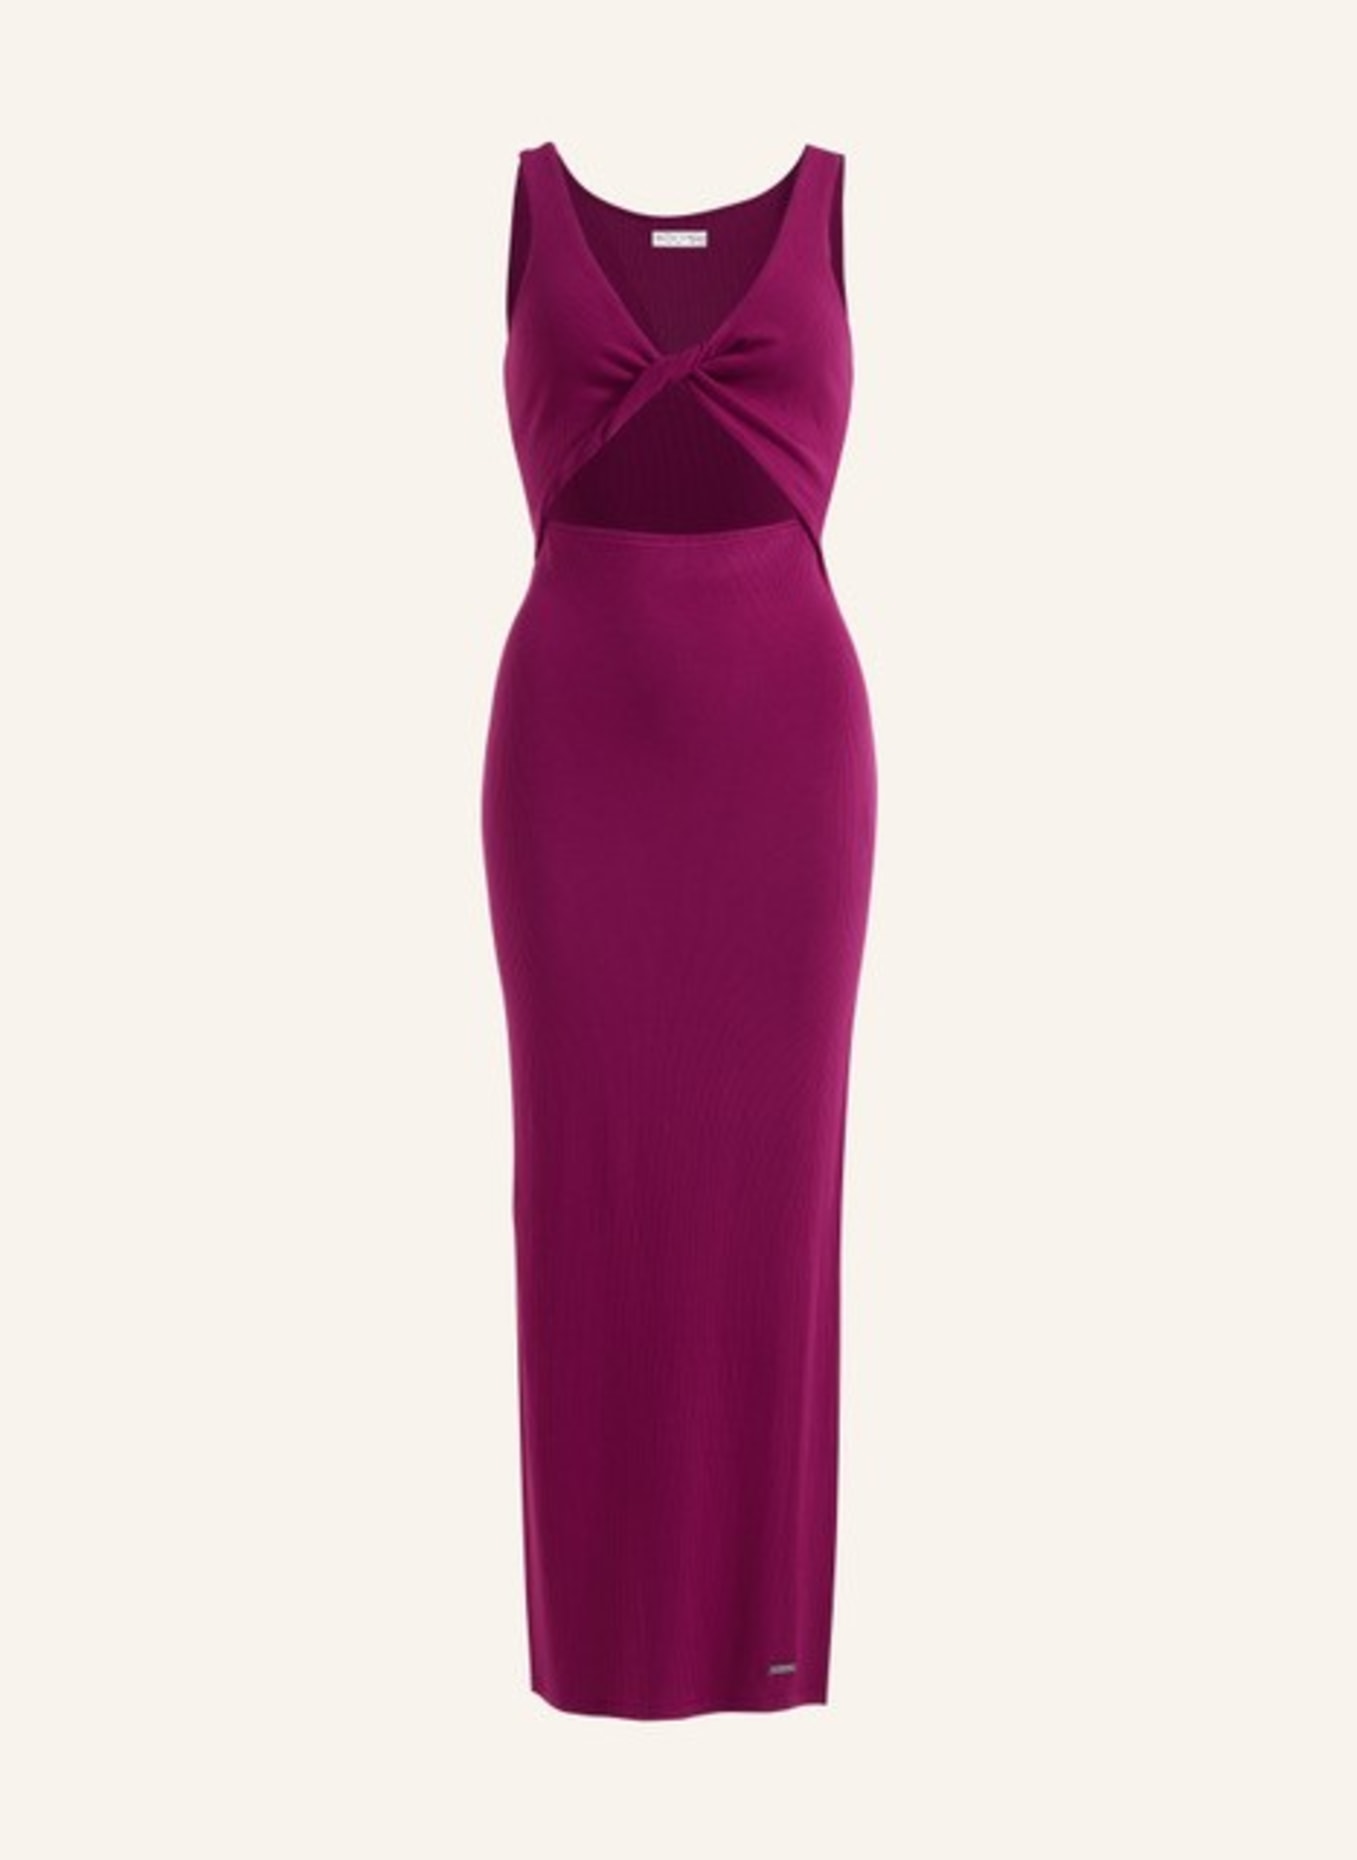 ADLYSH Kleid SHINY MOMENTS DRESS, Farbe: PINK (Bild 1)